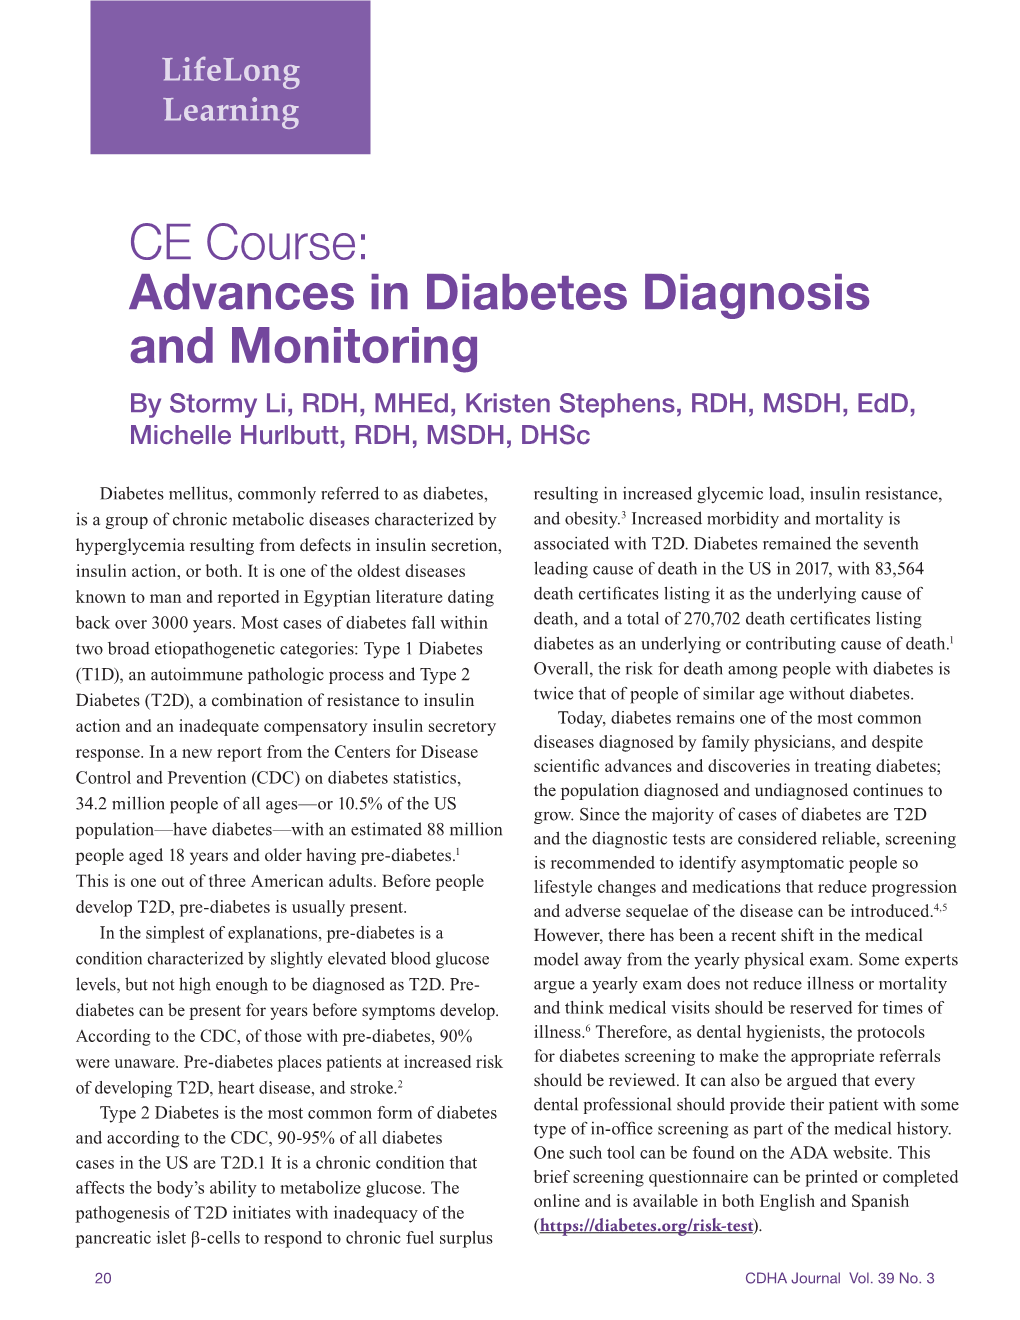 Advances in Diabetes Diagnosis and Monitoring by Stormy Li, RDH, Mhed, Kristen Stephens, RDH, MSDH, Edd, Michelle Hurlbutt, RDH, MSDH, Dhsc